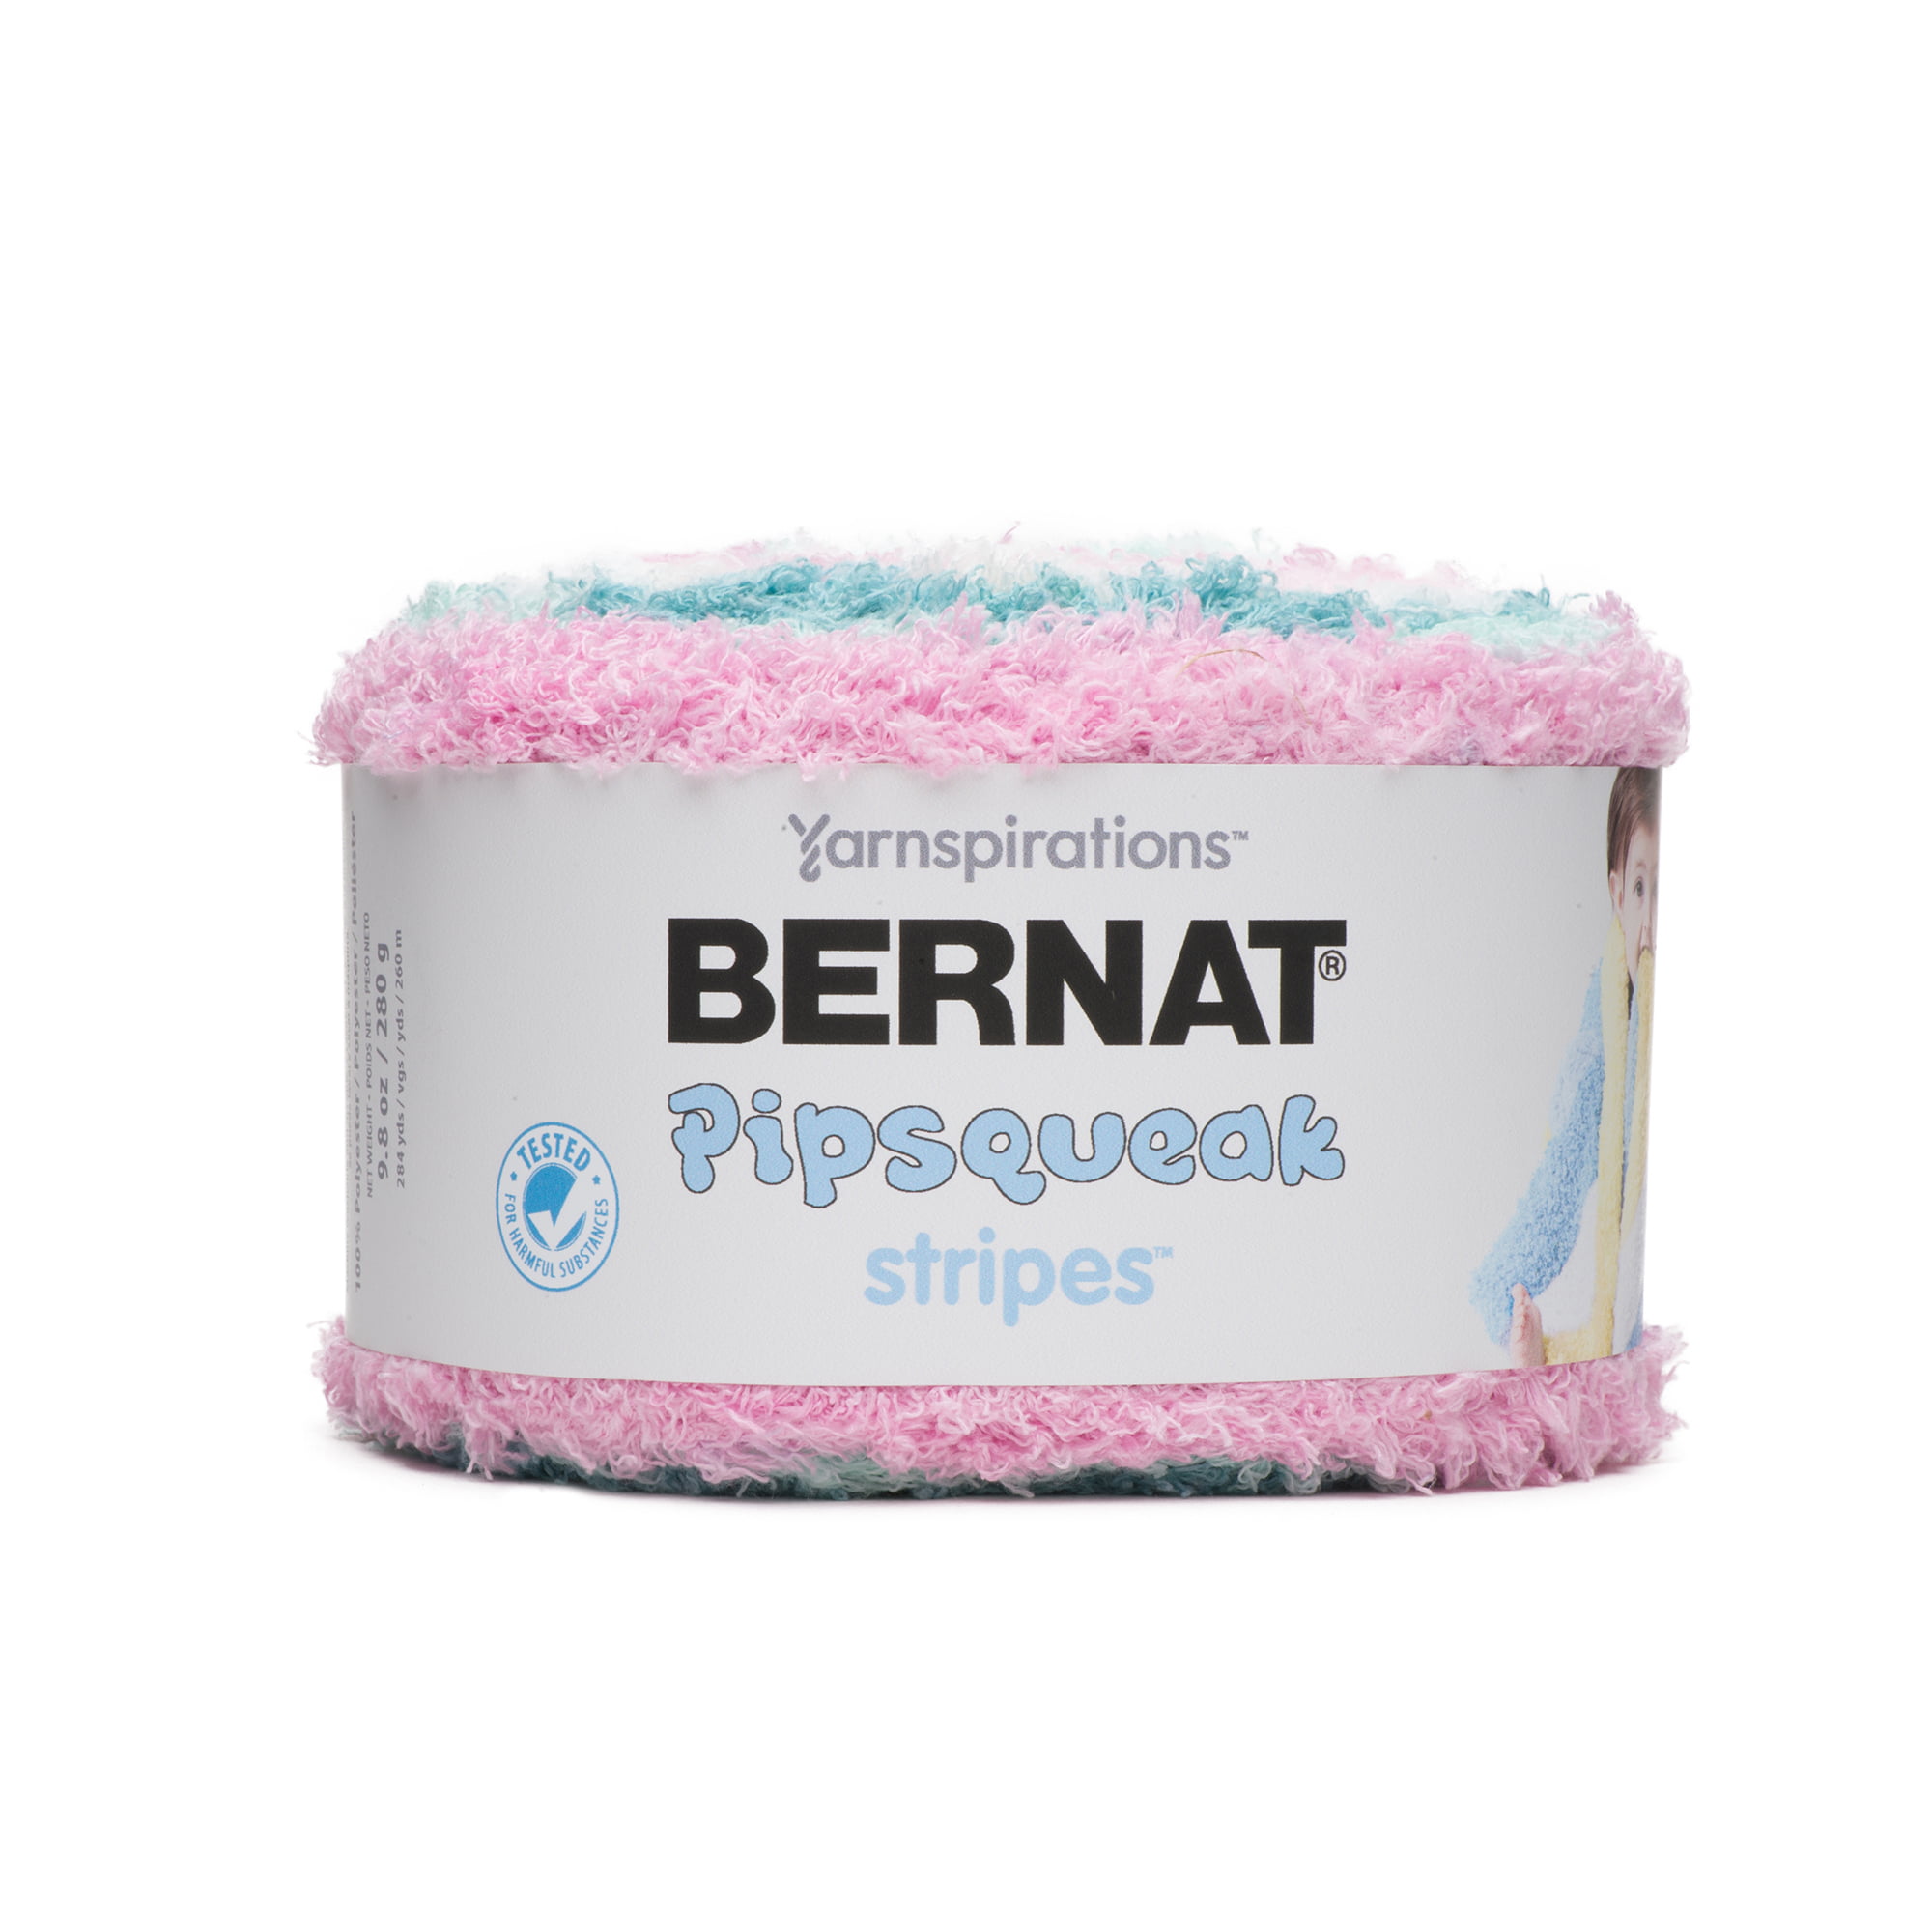 Bernat Pipsqueak Stripes Yarn, 9.8 Oz, Cotton Candy 2-Pack